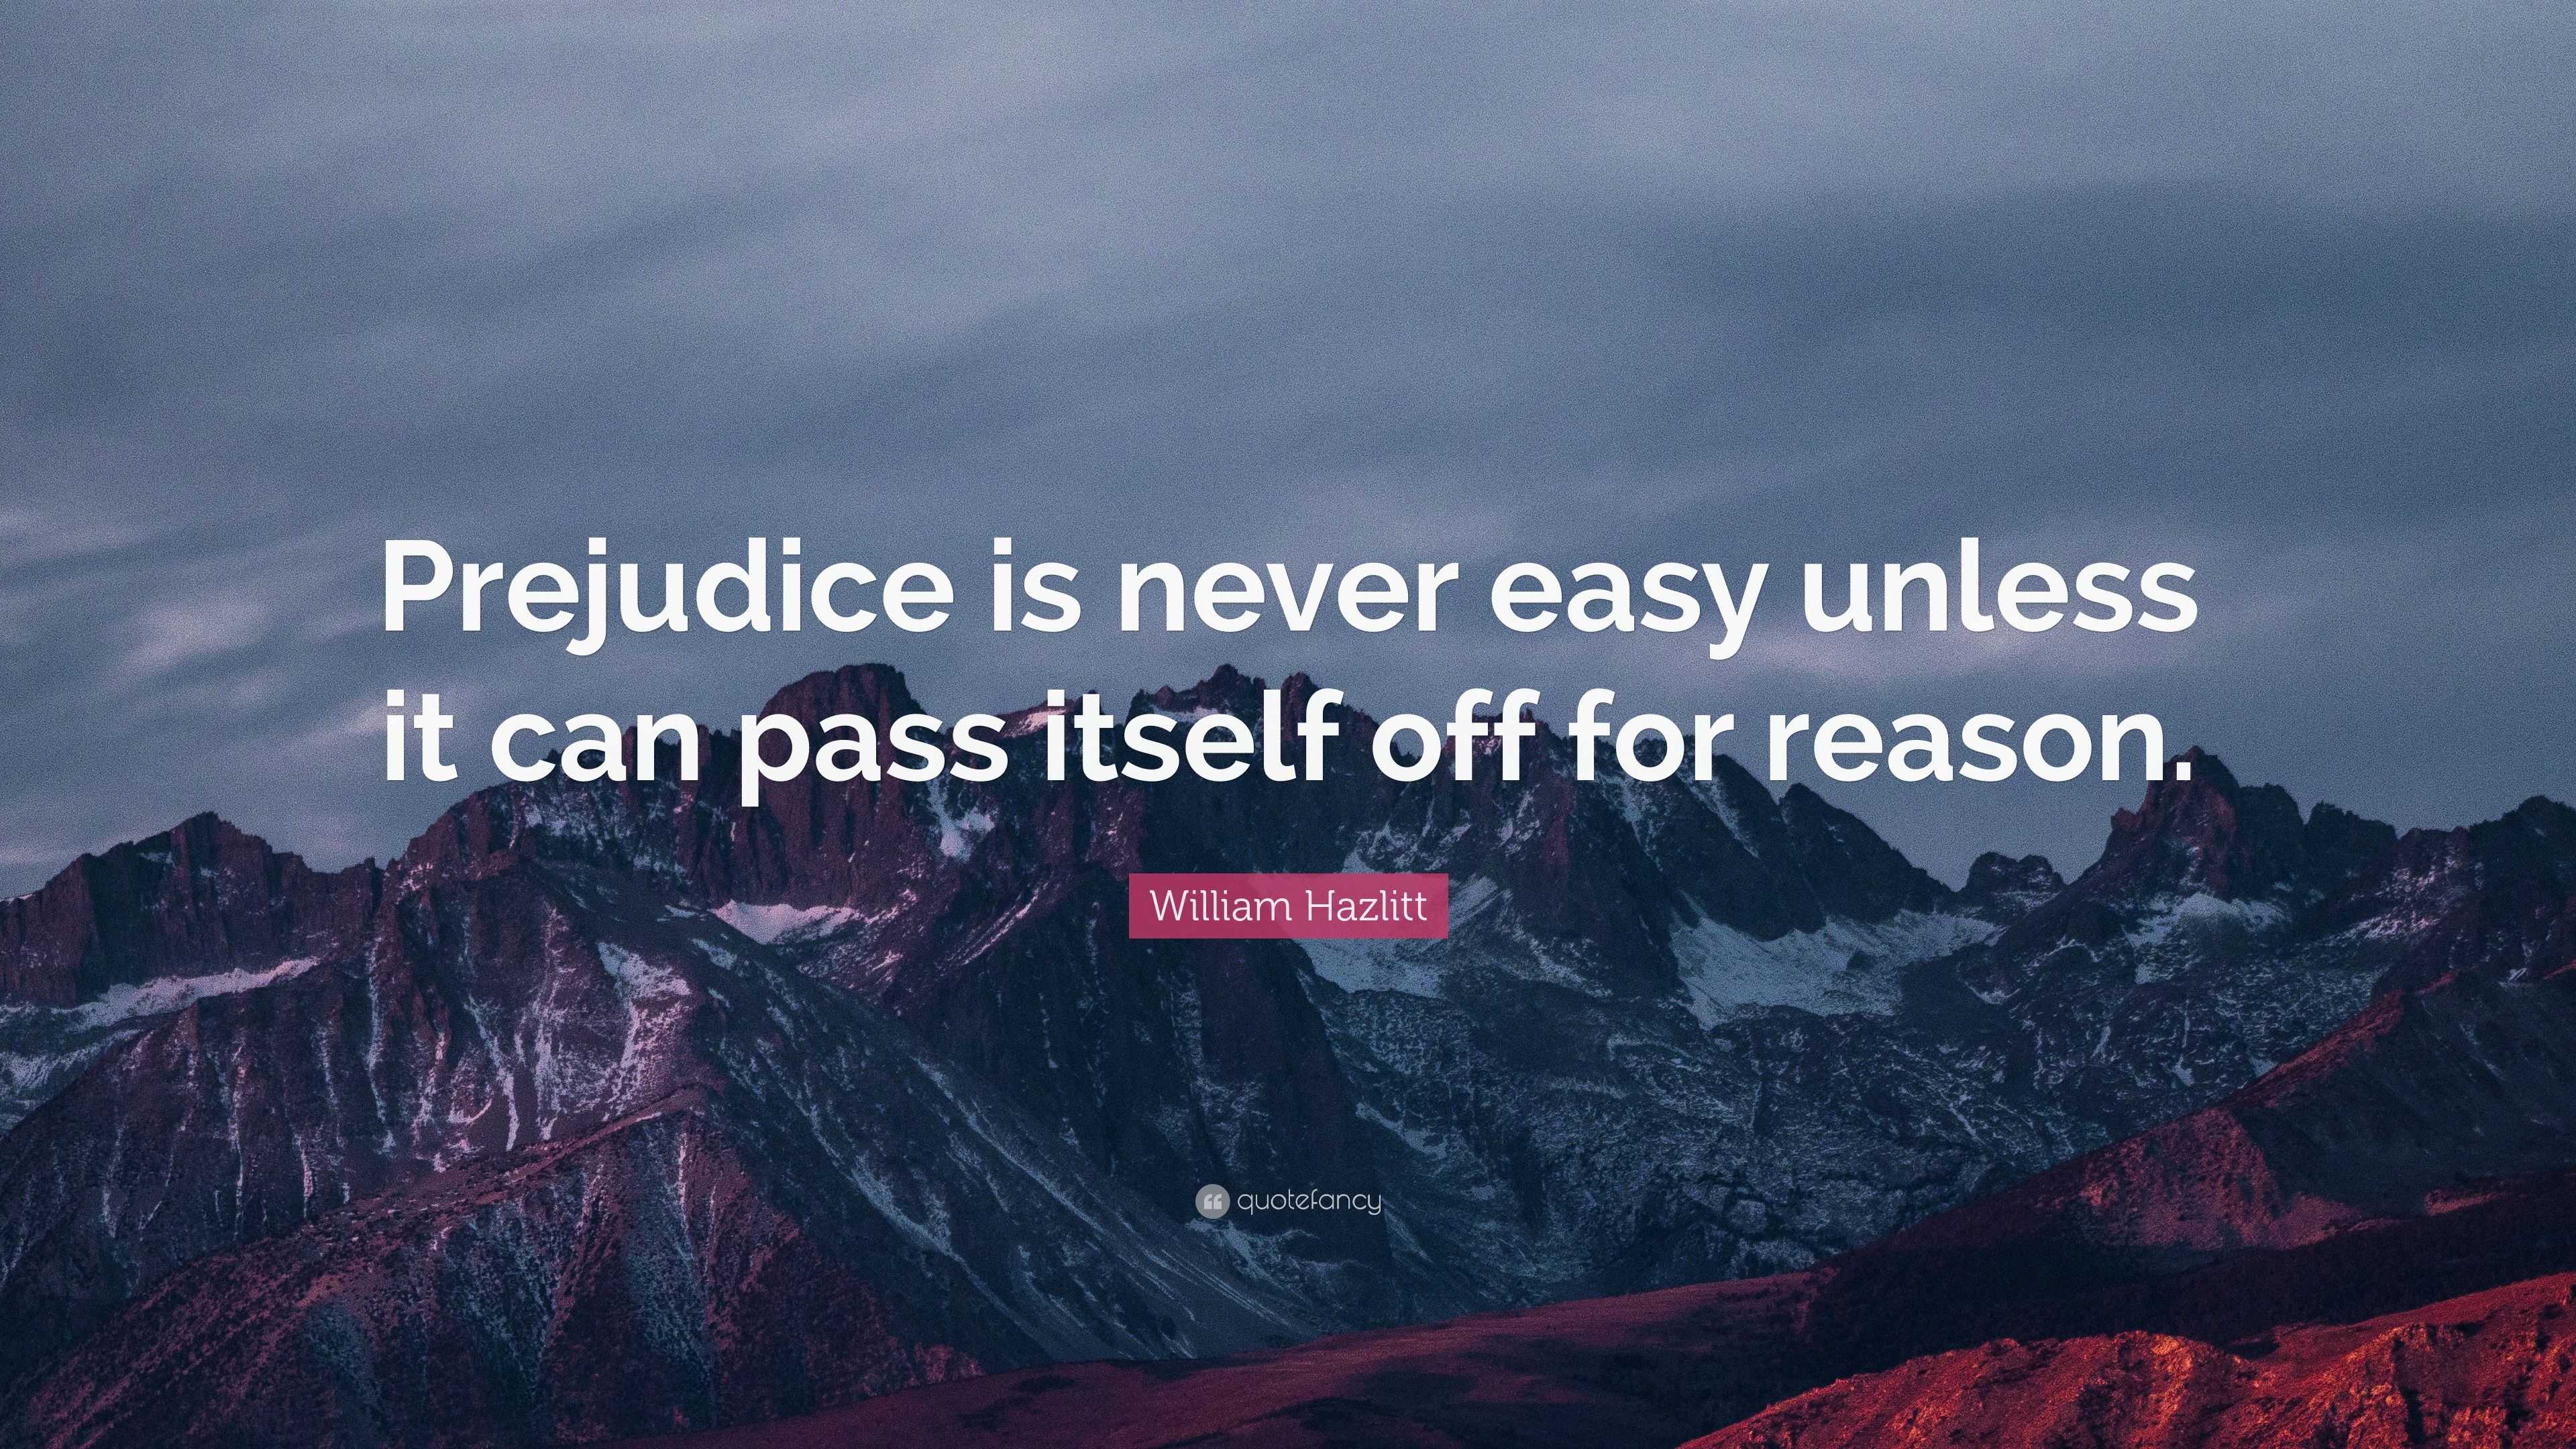 William Hazlitt Quote: “Prejudice is never easy unless it can pass ...